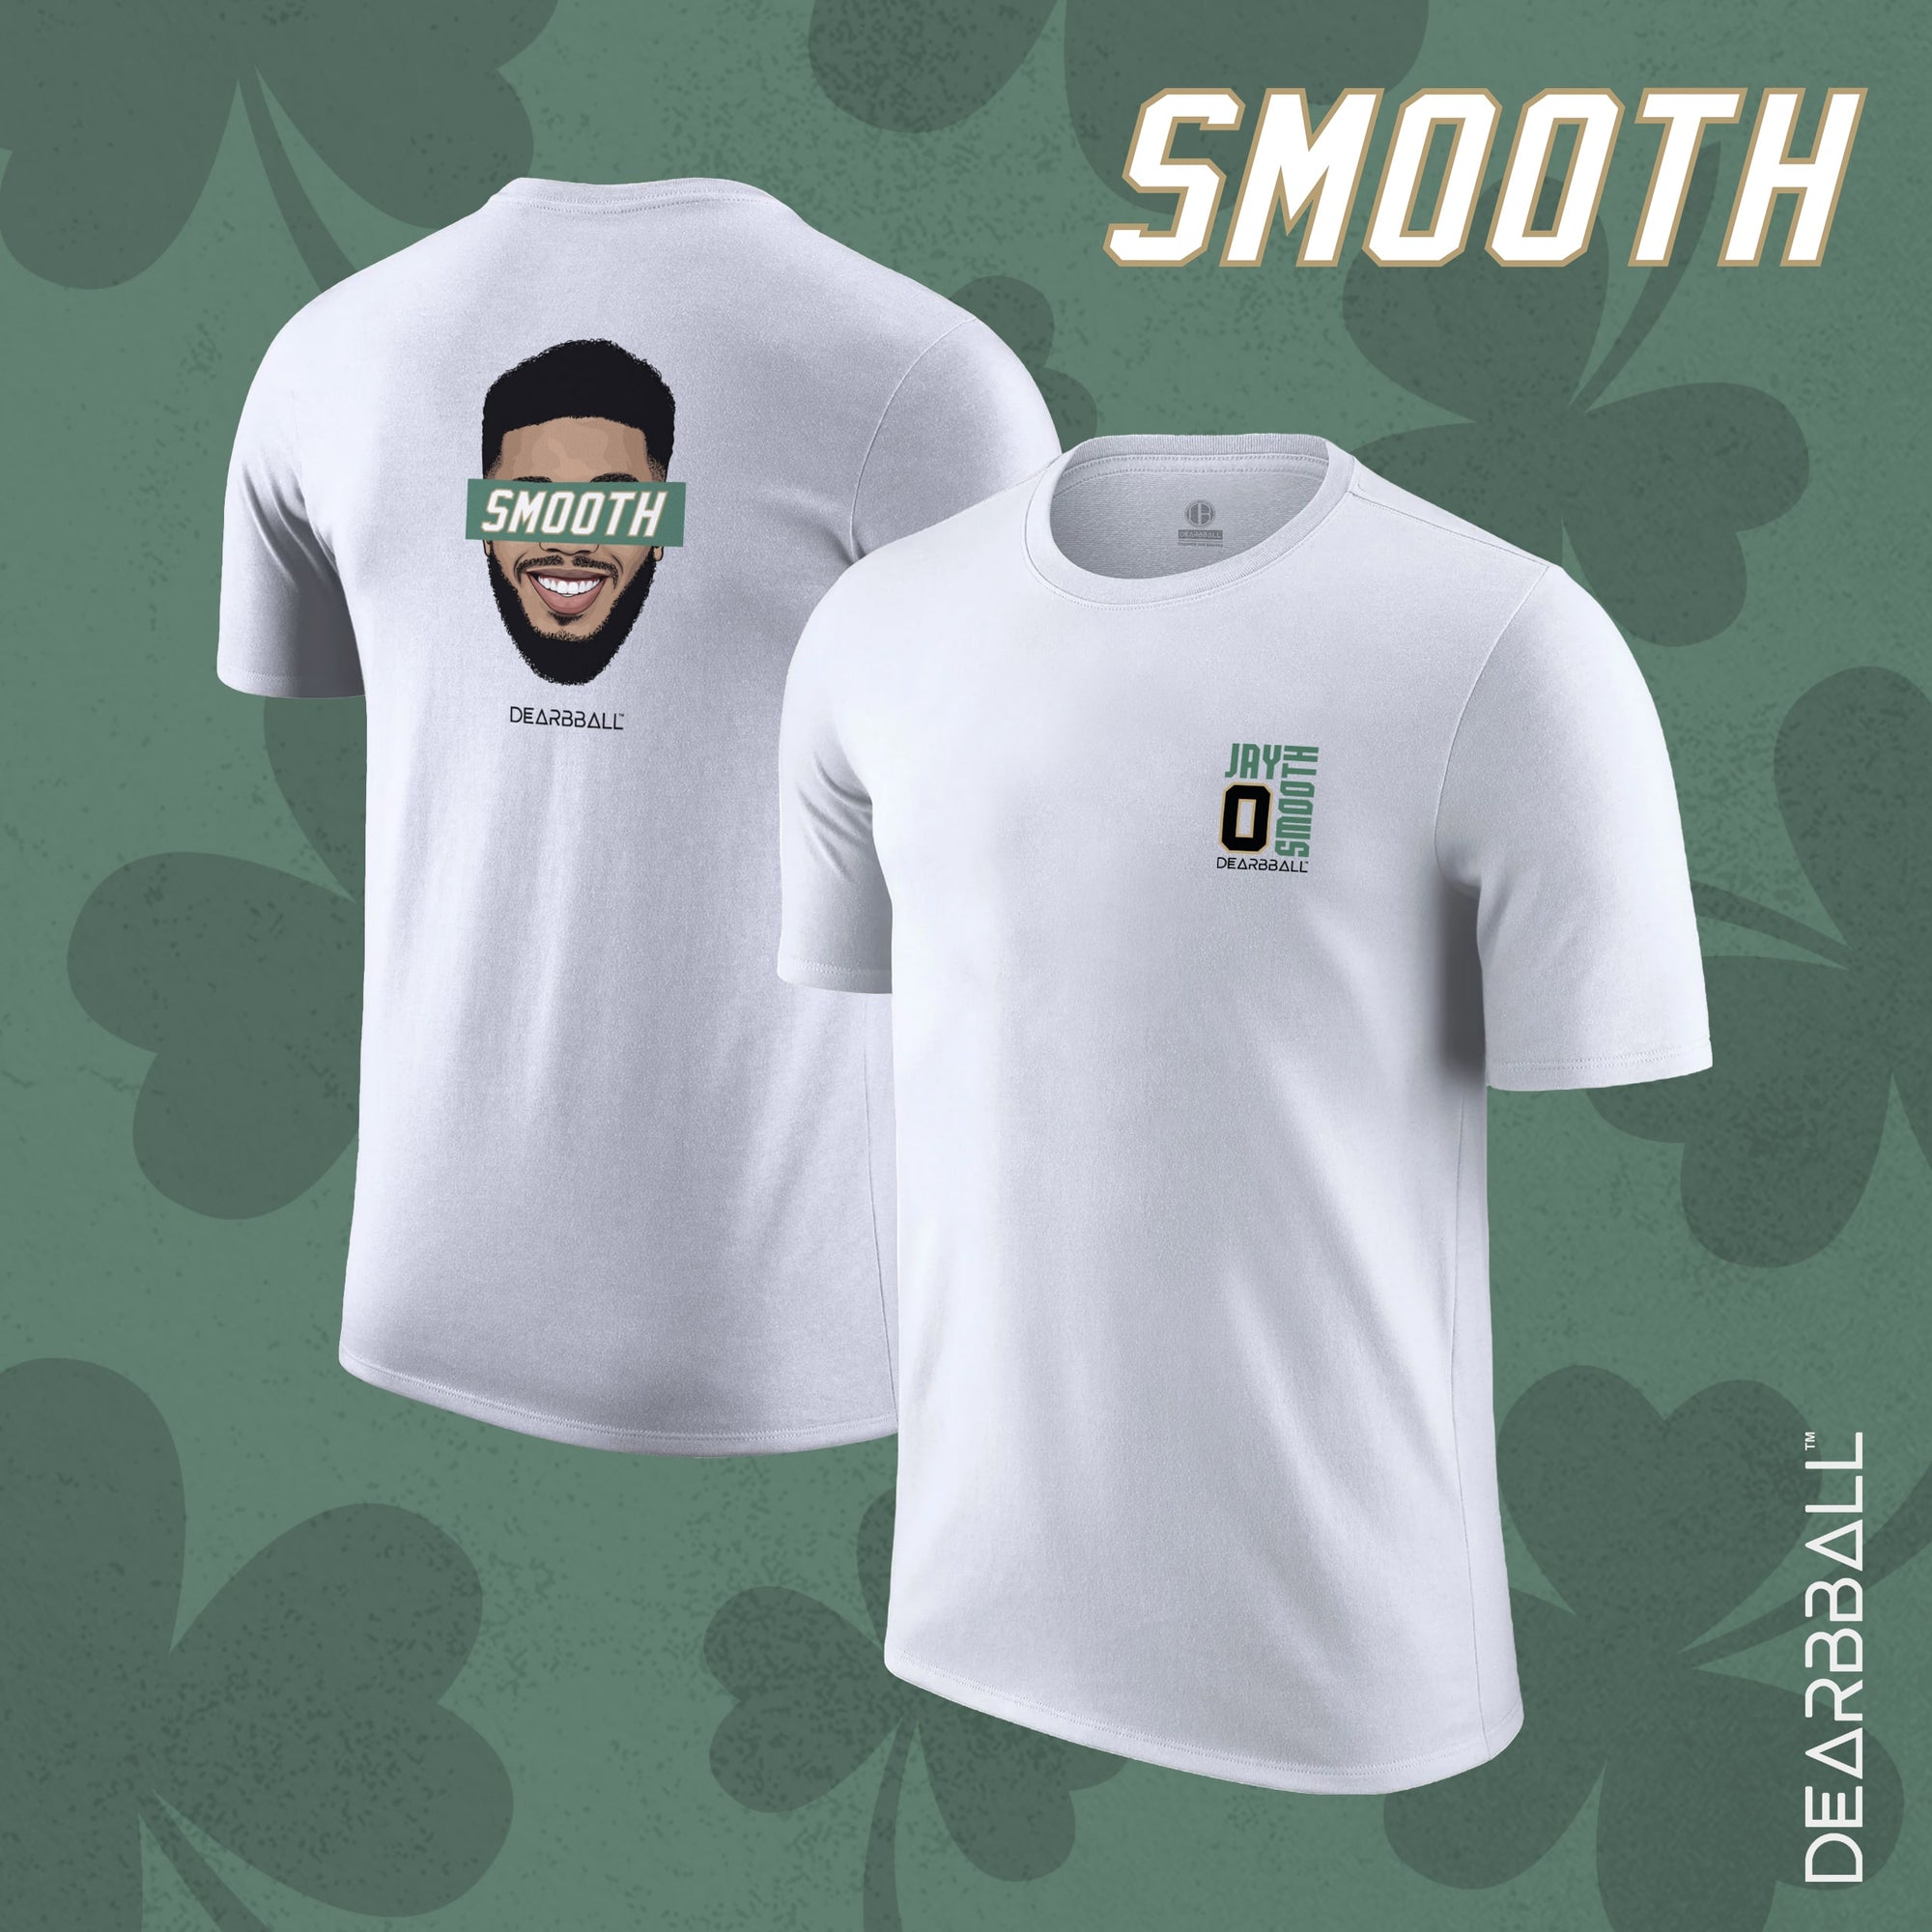 DearBBall Short T-Shirt Set - SMOOTH Finals Premium White Edition